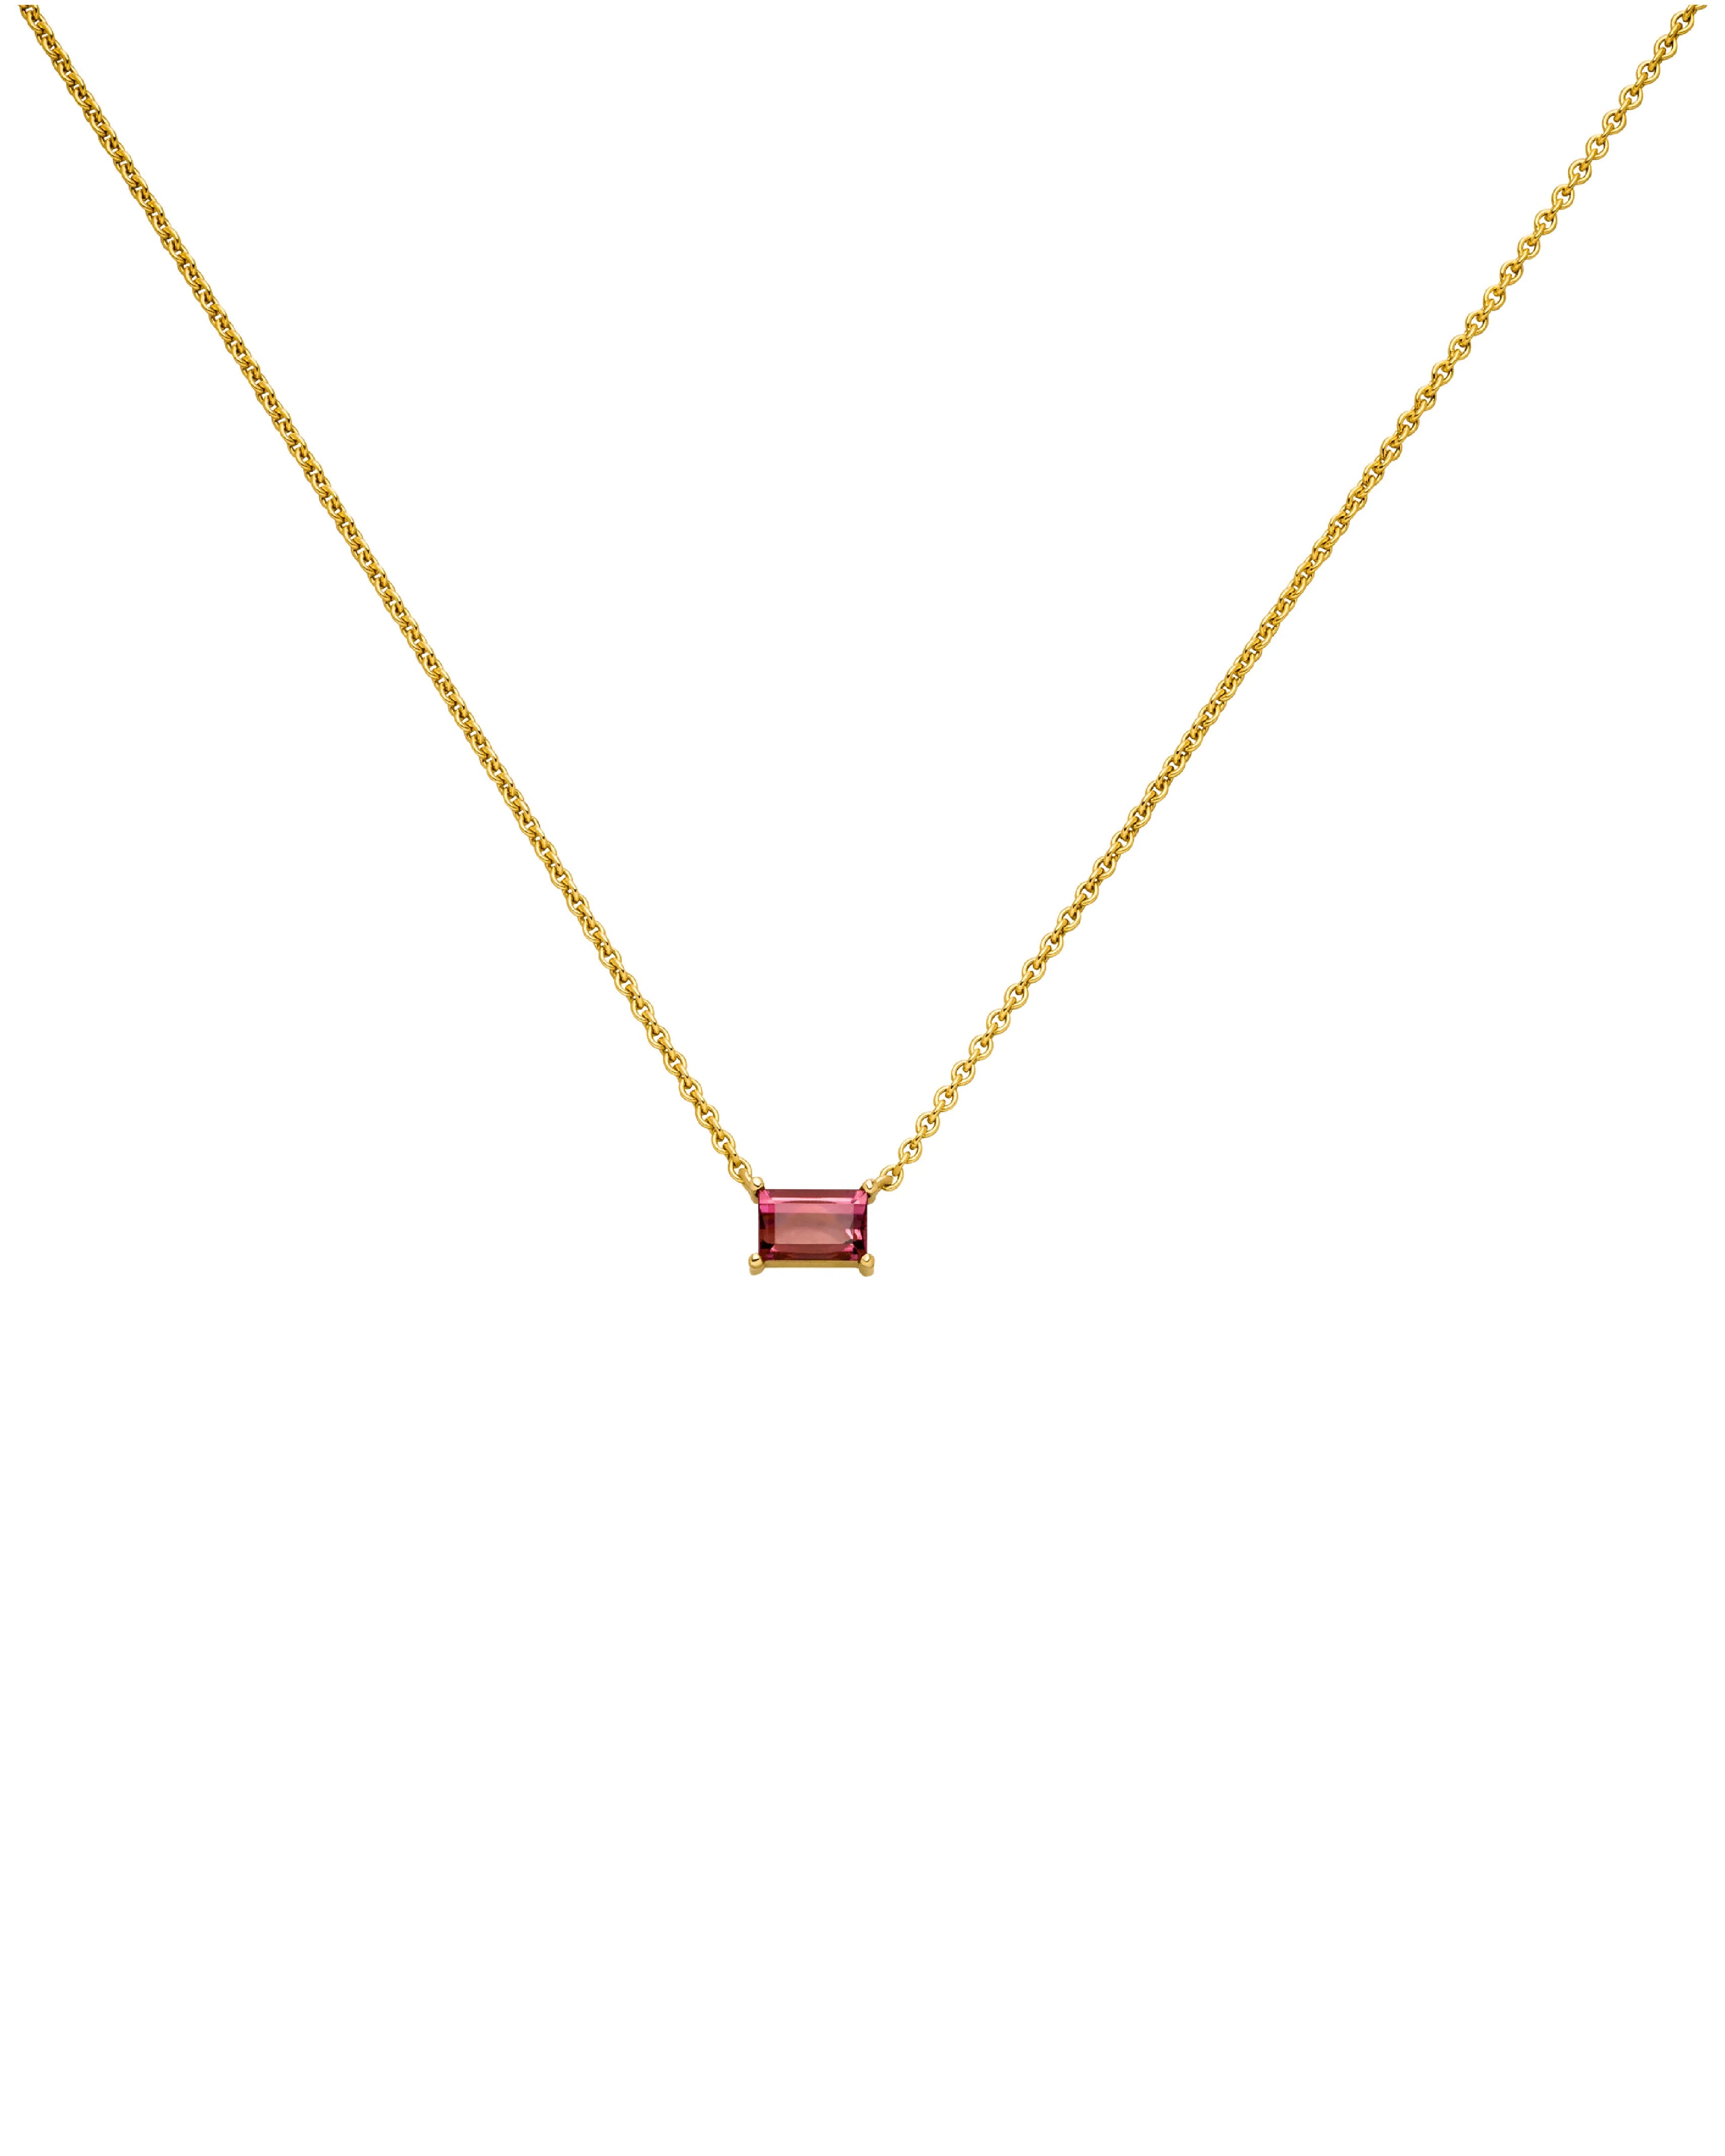 LÍGERA - Halskette Gold - Gelbgold 585